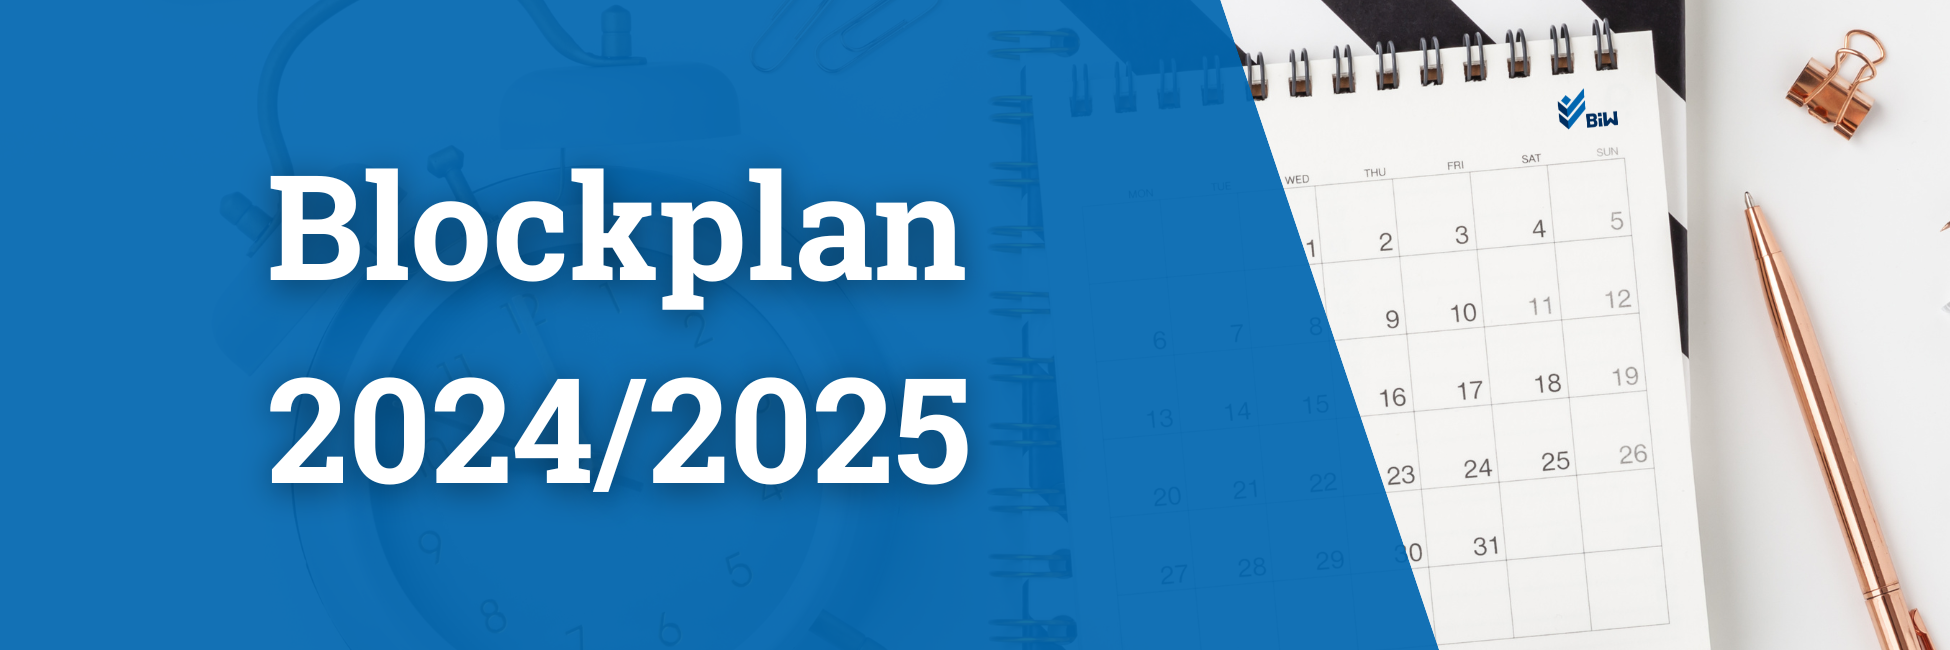 Blockplan 2024-2025